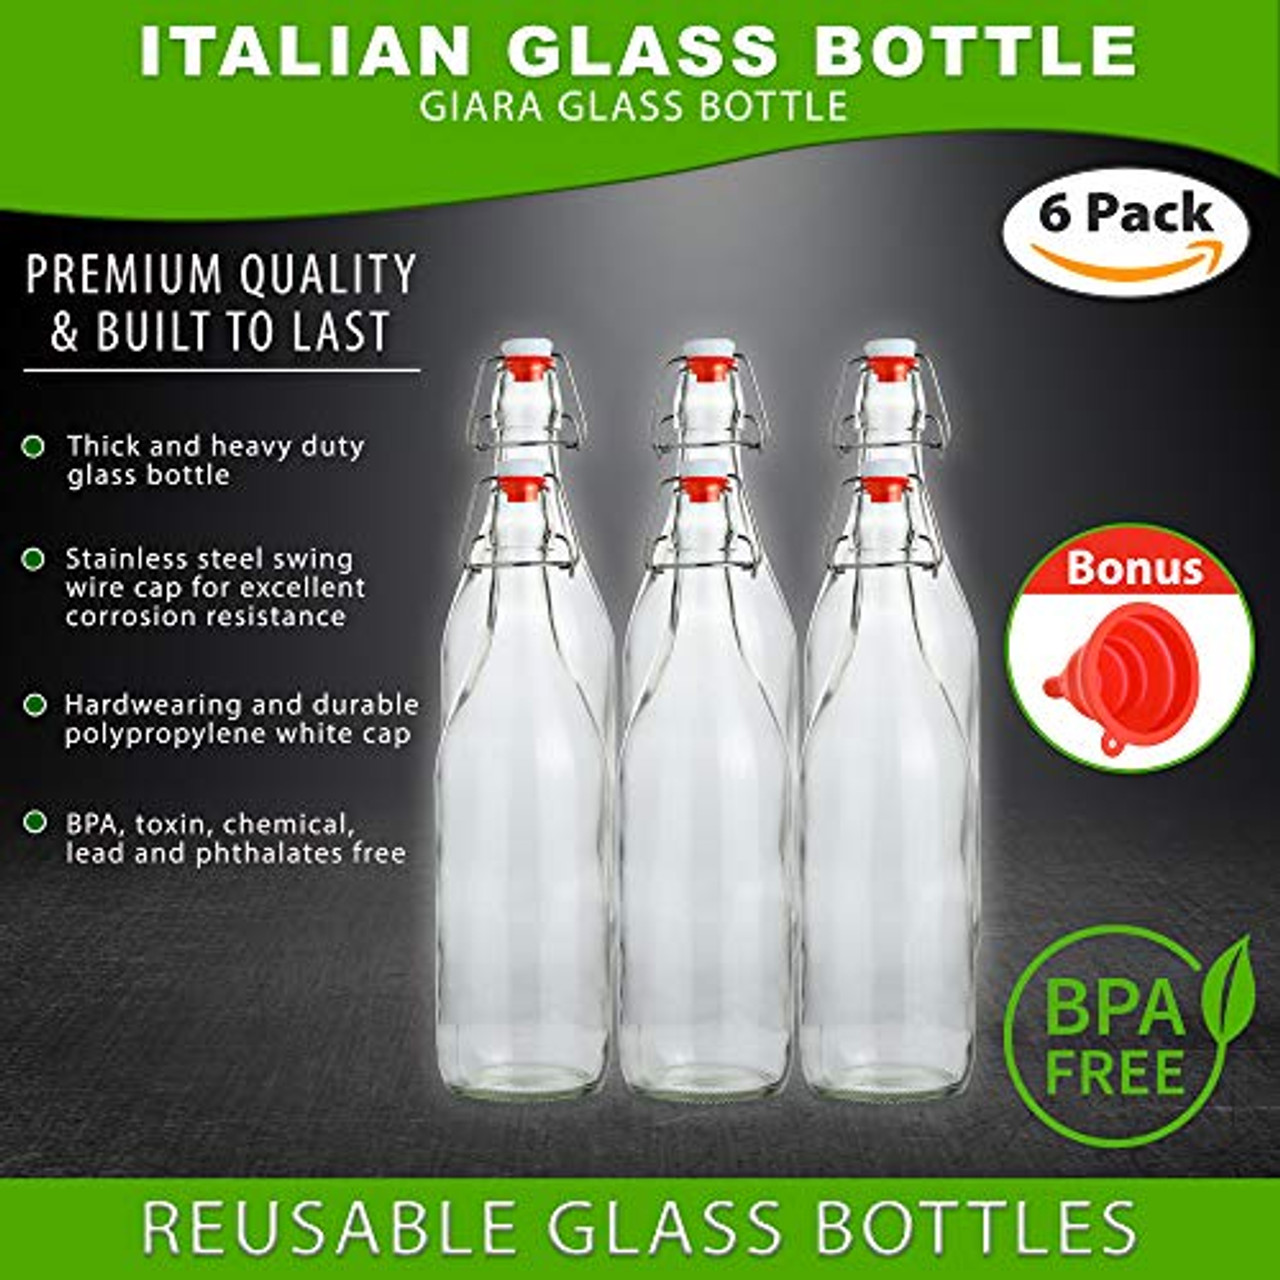  AYL Flip Top Glass Bottle [1 Liter / 33 fl. oz.] [Pack